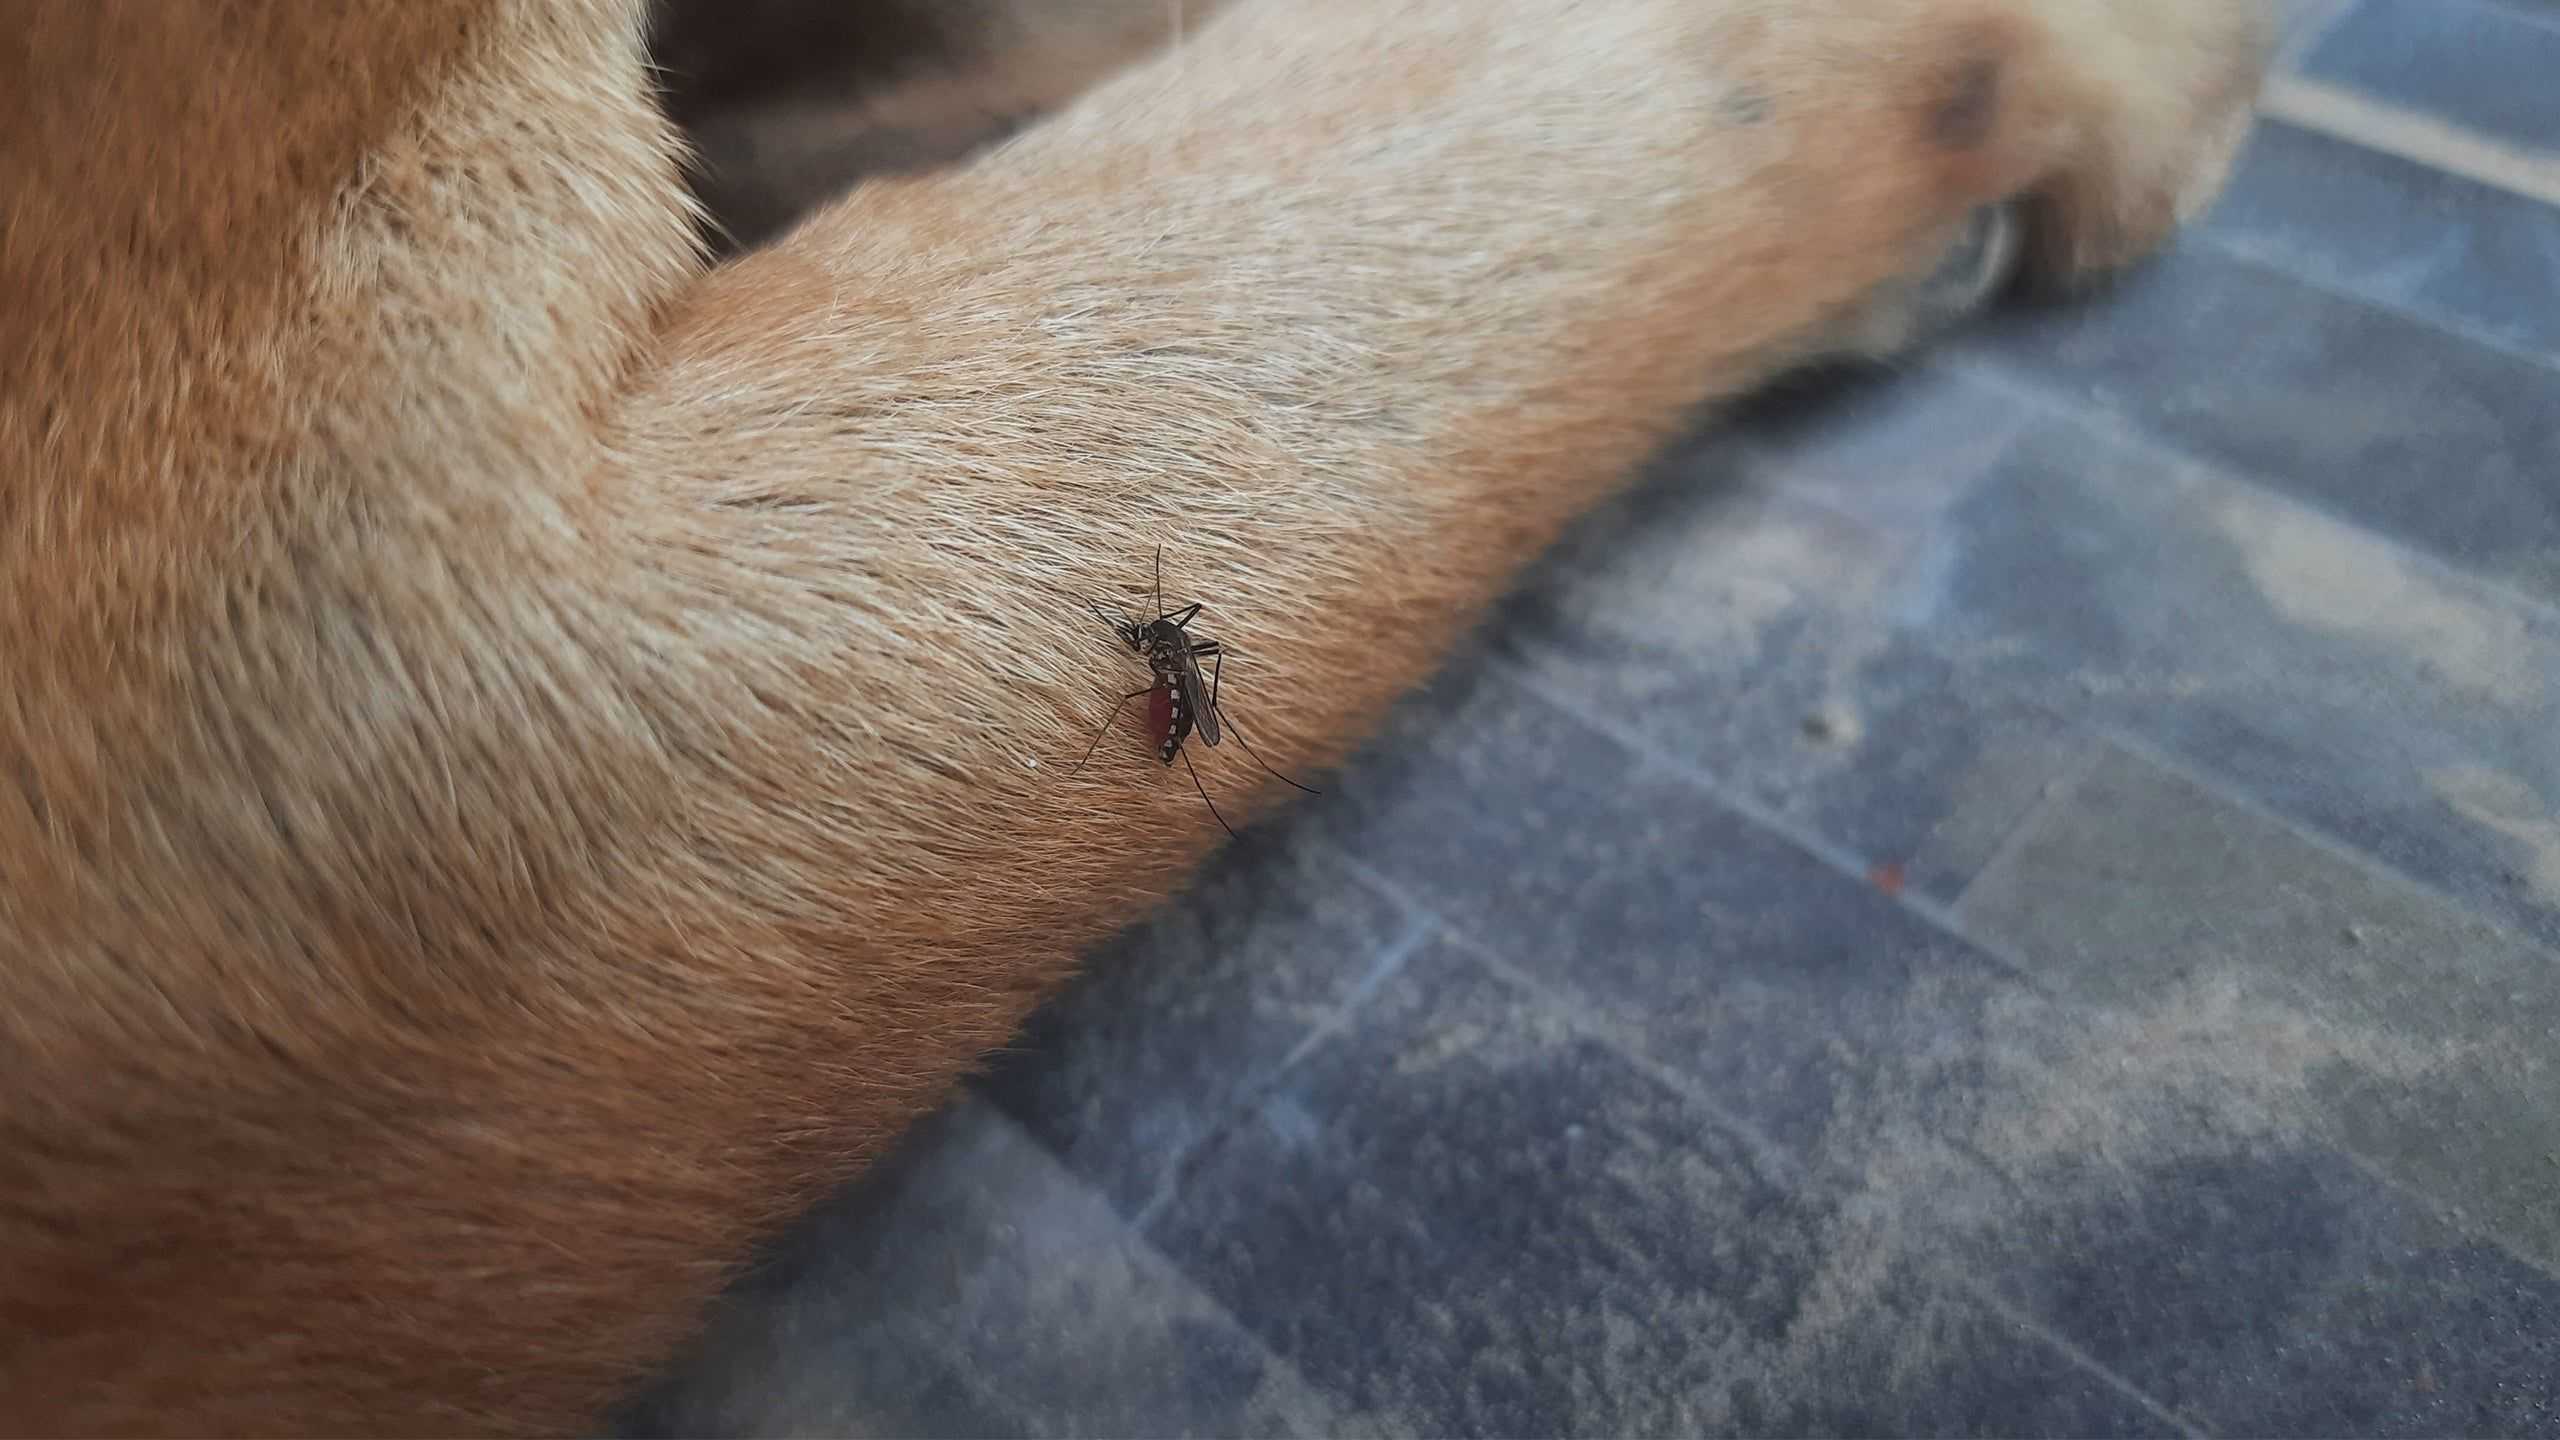 mosquito biting a pet